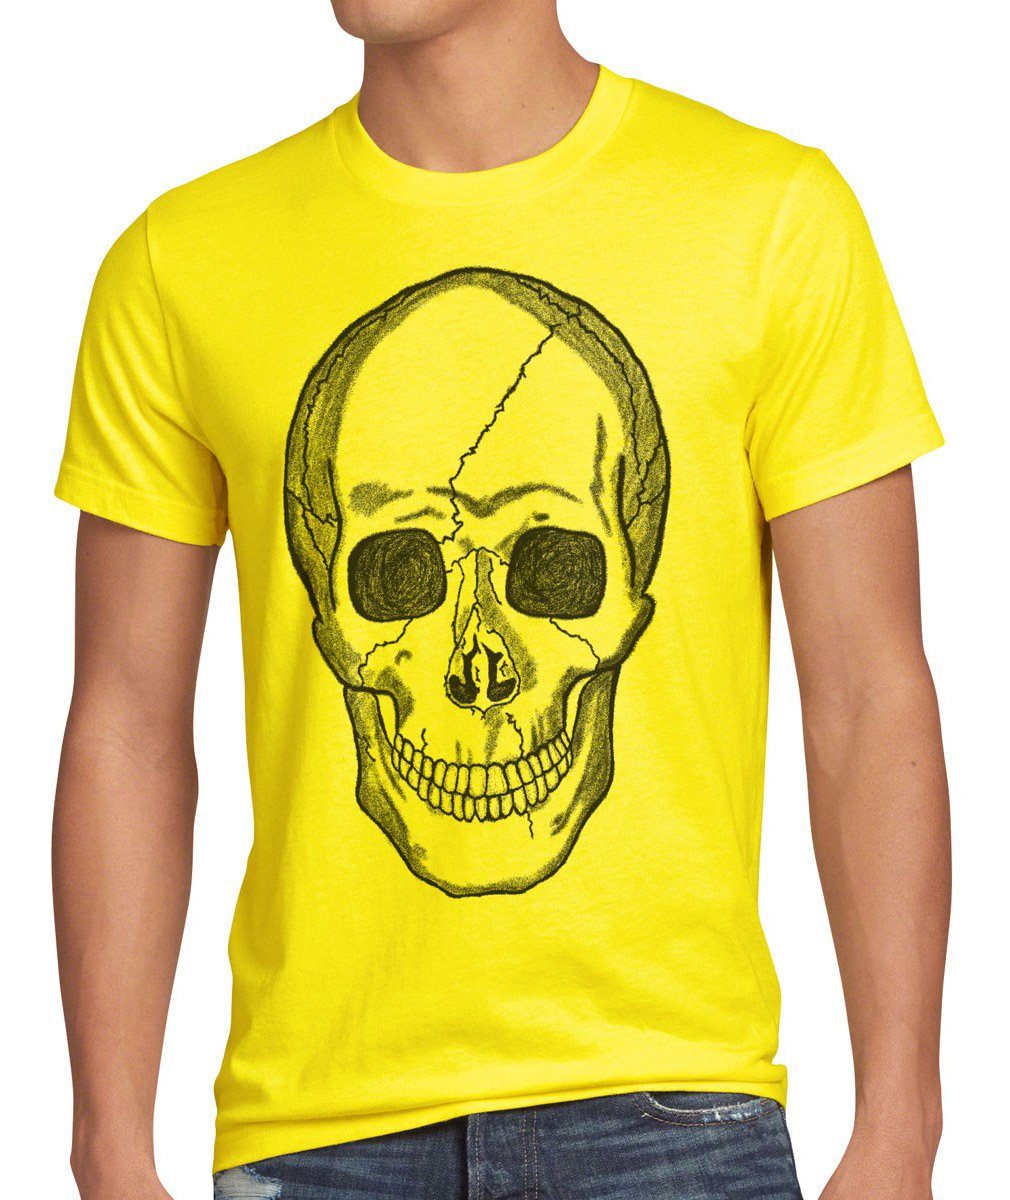 style3 Print-Shirt Herren T-Shirt Skull Totenkopf Harley Rocker Punk Tattoo gothic knochen biker us gelb